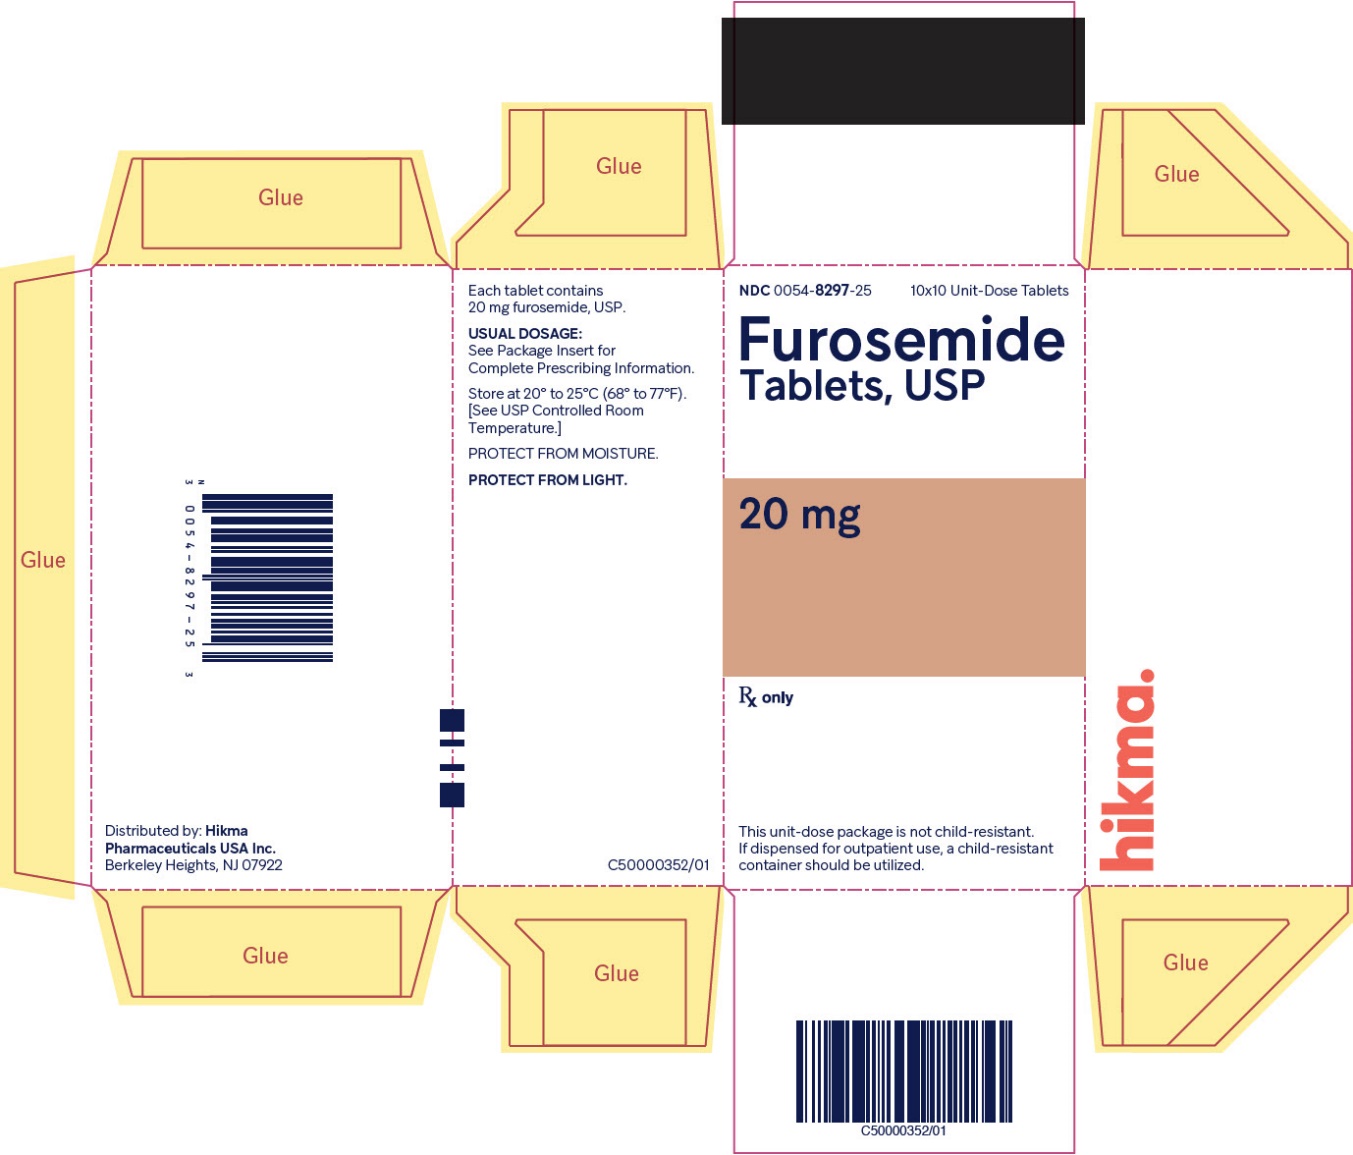 Furosemide Tablets USP, 20 mg (10x10 Unit-Dose Tablets) folding carton image